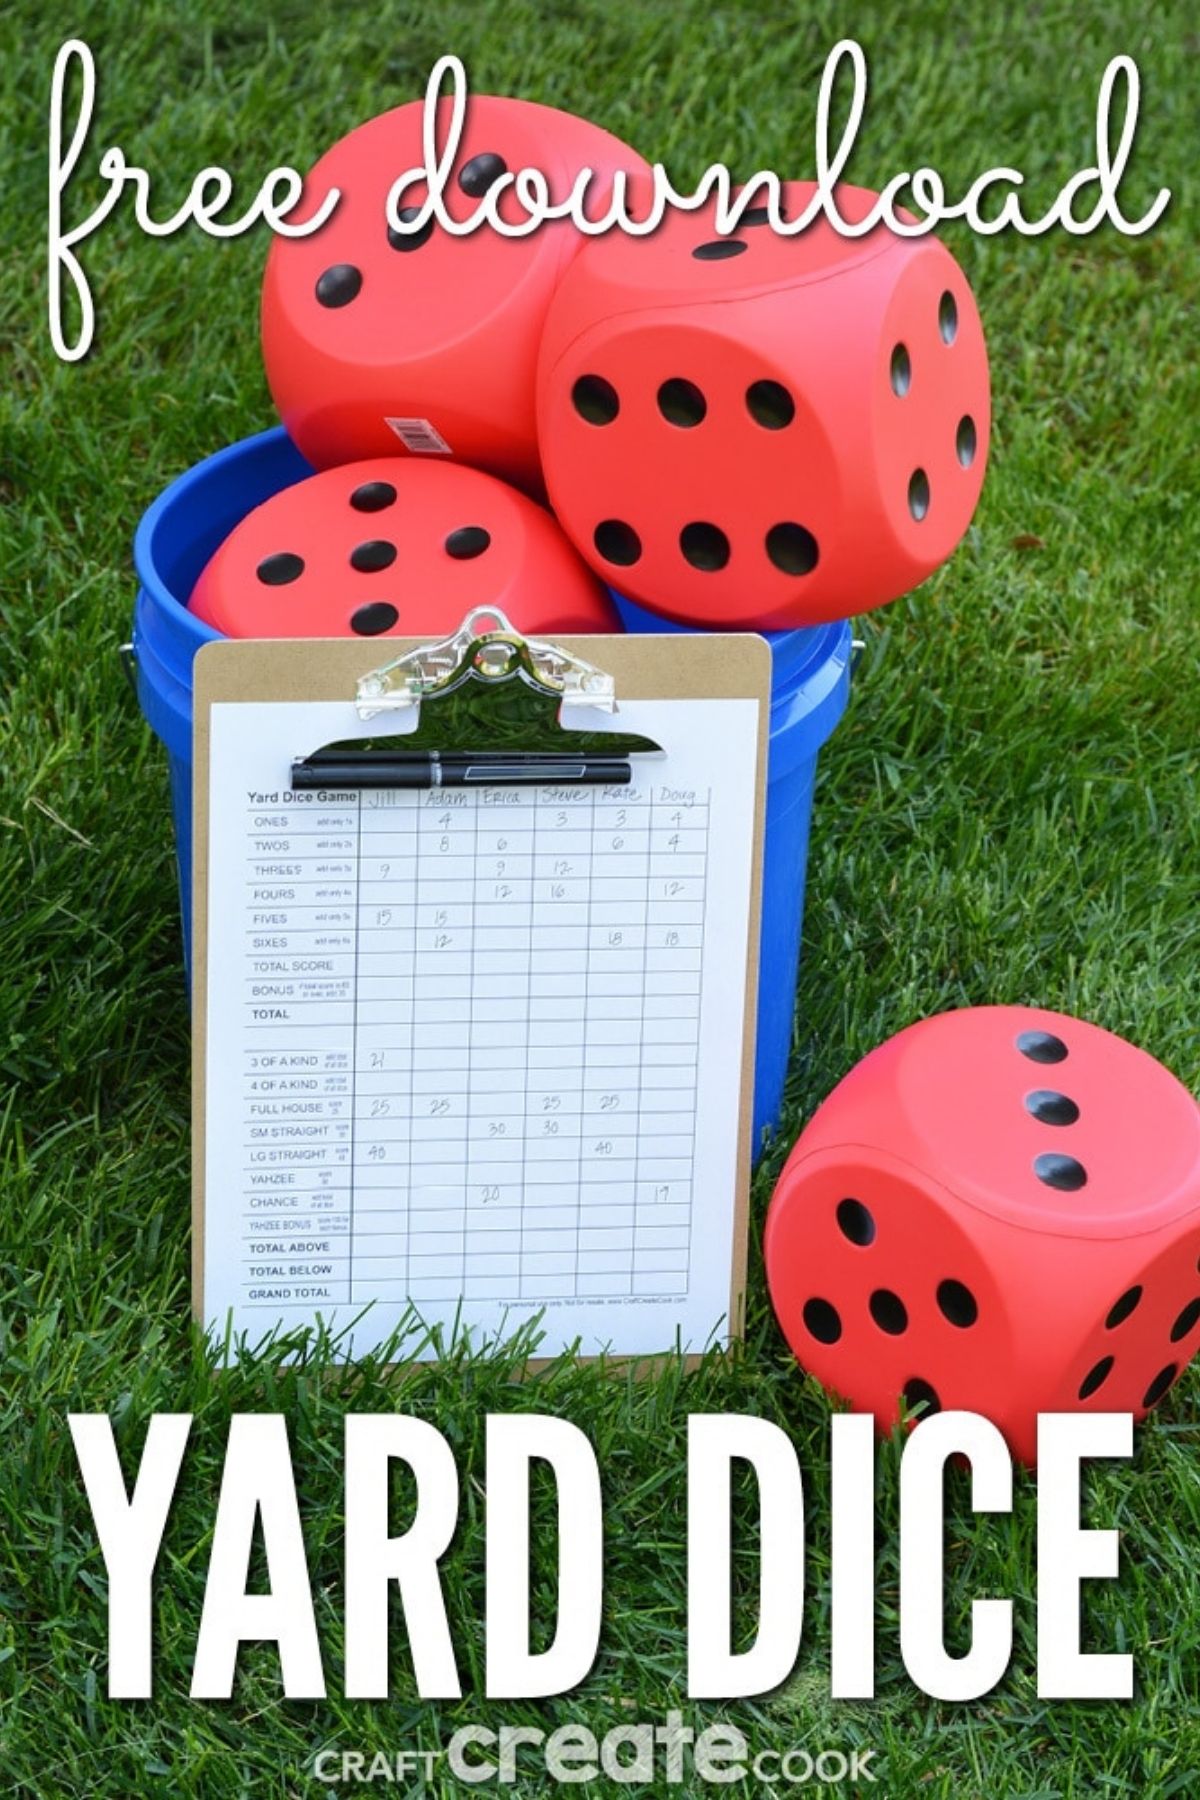 Yard dice